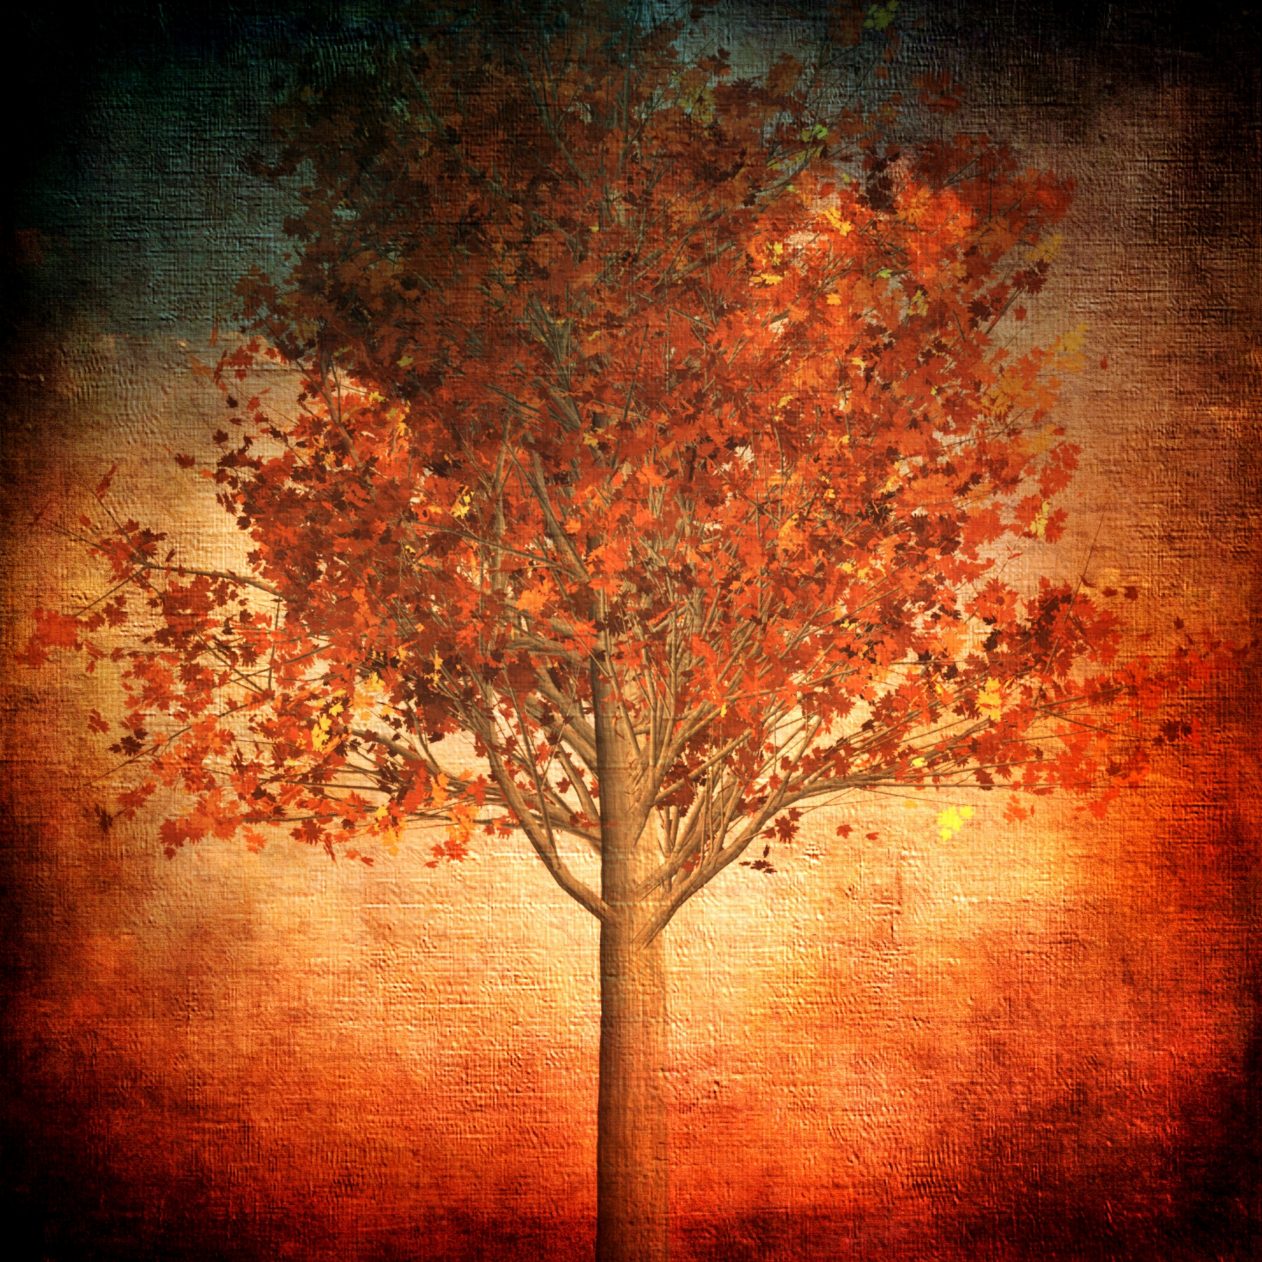 1262x1262 Parallax wallpaper 4k Aesthetic Autumn Red Fall Leaves Nature iPad Wallpaper 1262x1262 pixels resolution